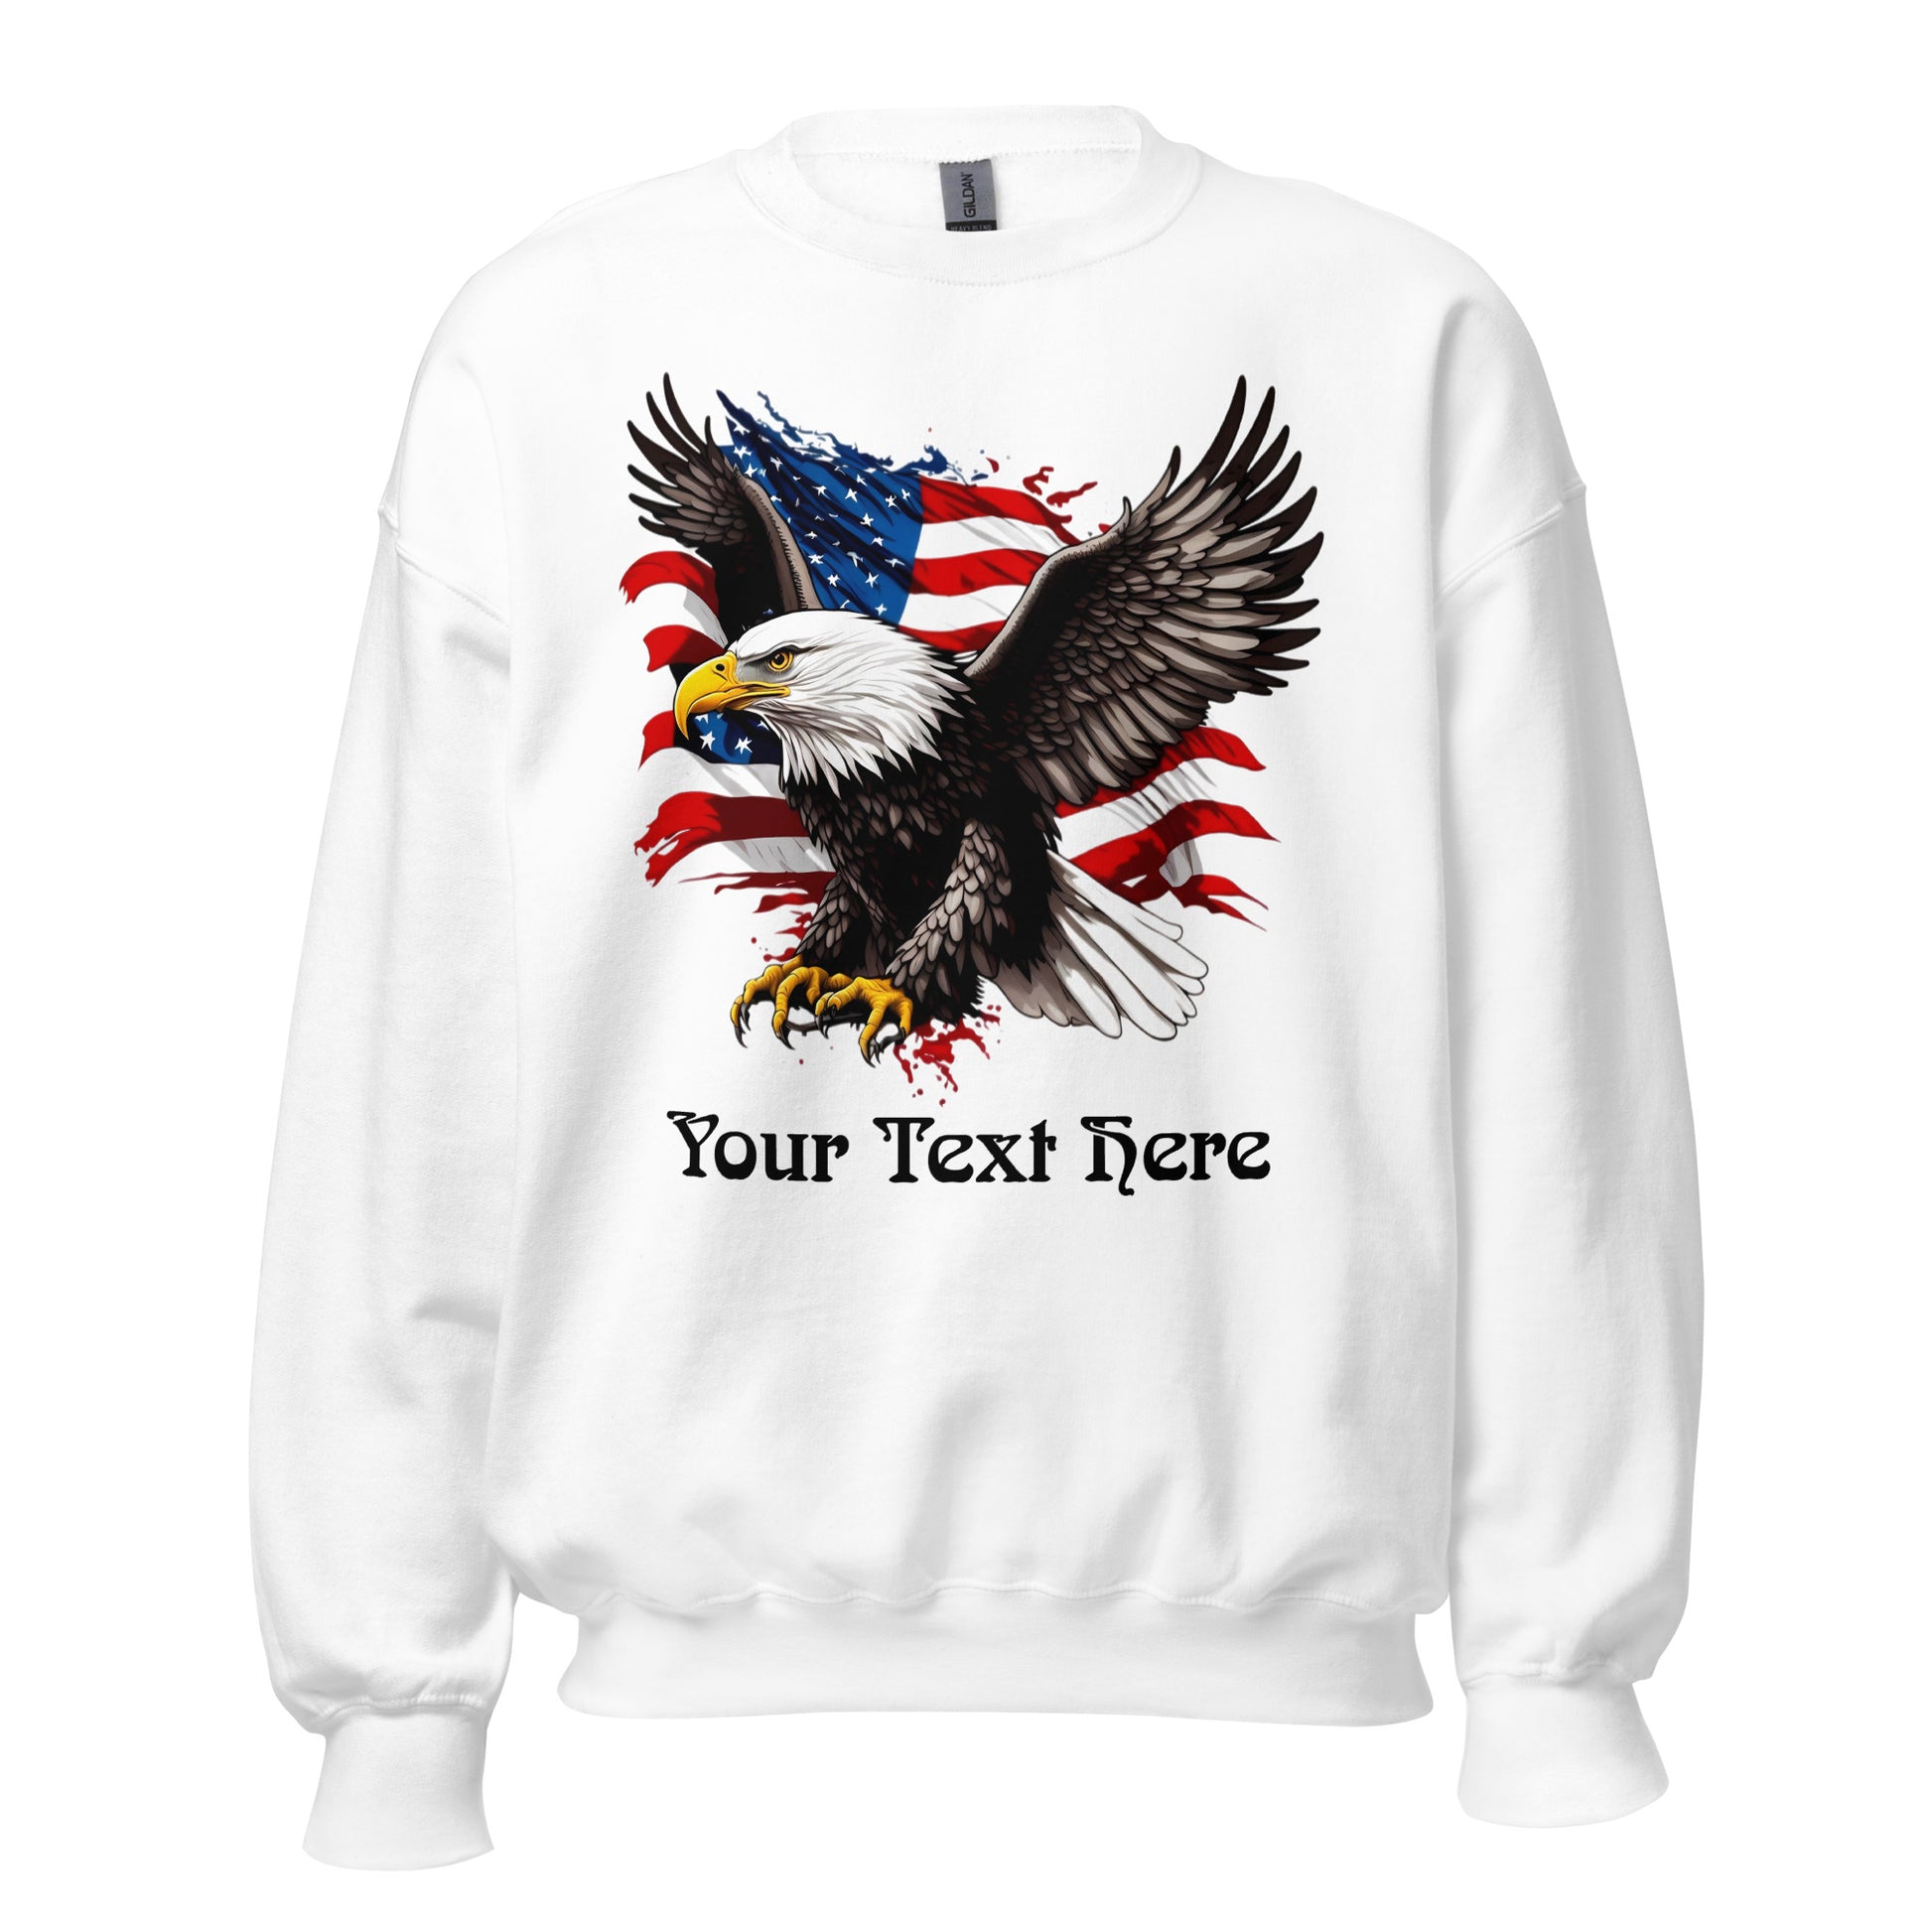 Customizable Sweatshirt With Eagle Graphic